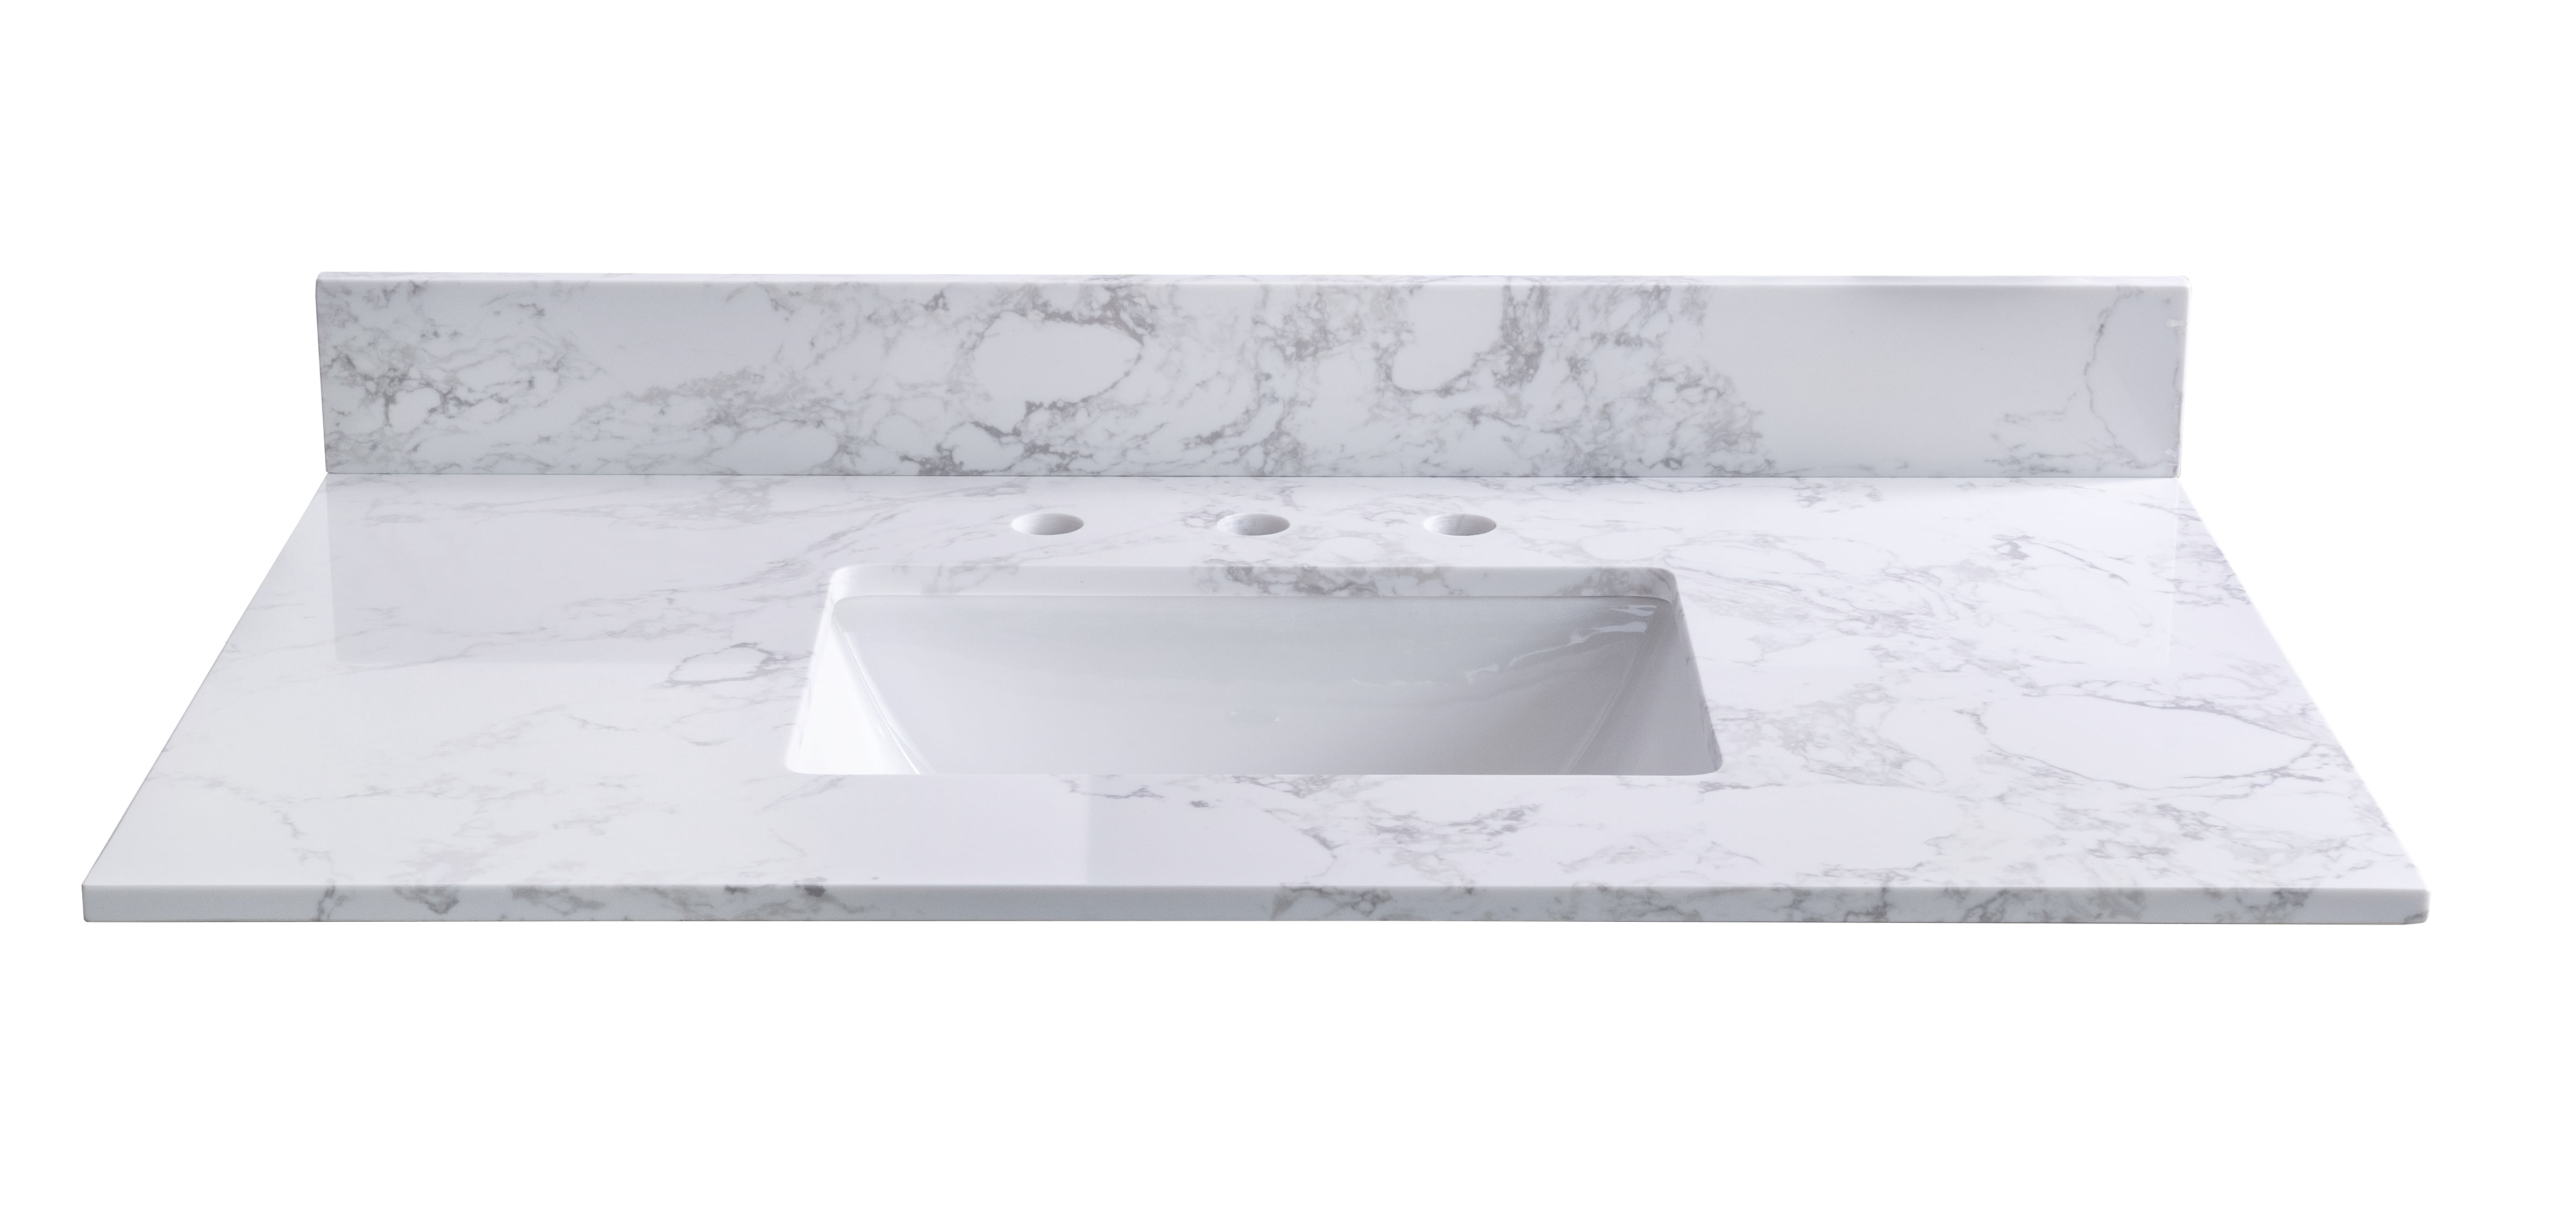 Rectangular Cermaic Sink And Backsplash, Marble Vanity Top With Sink